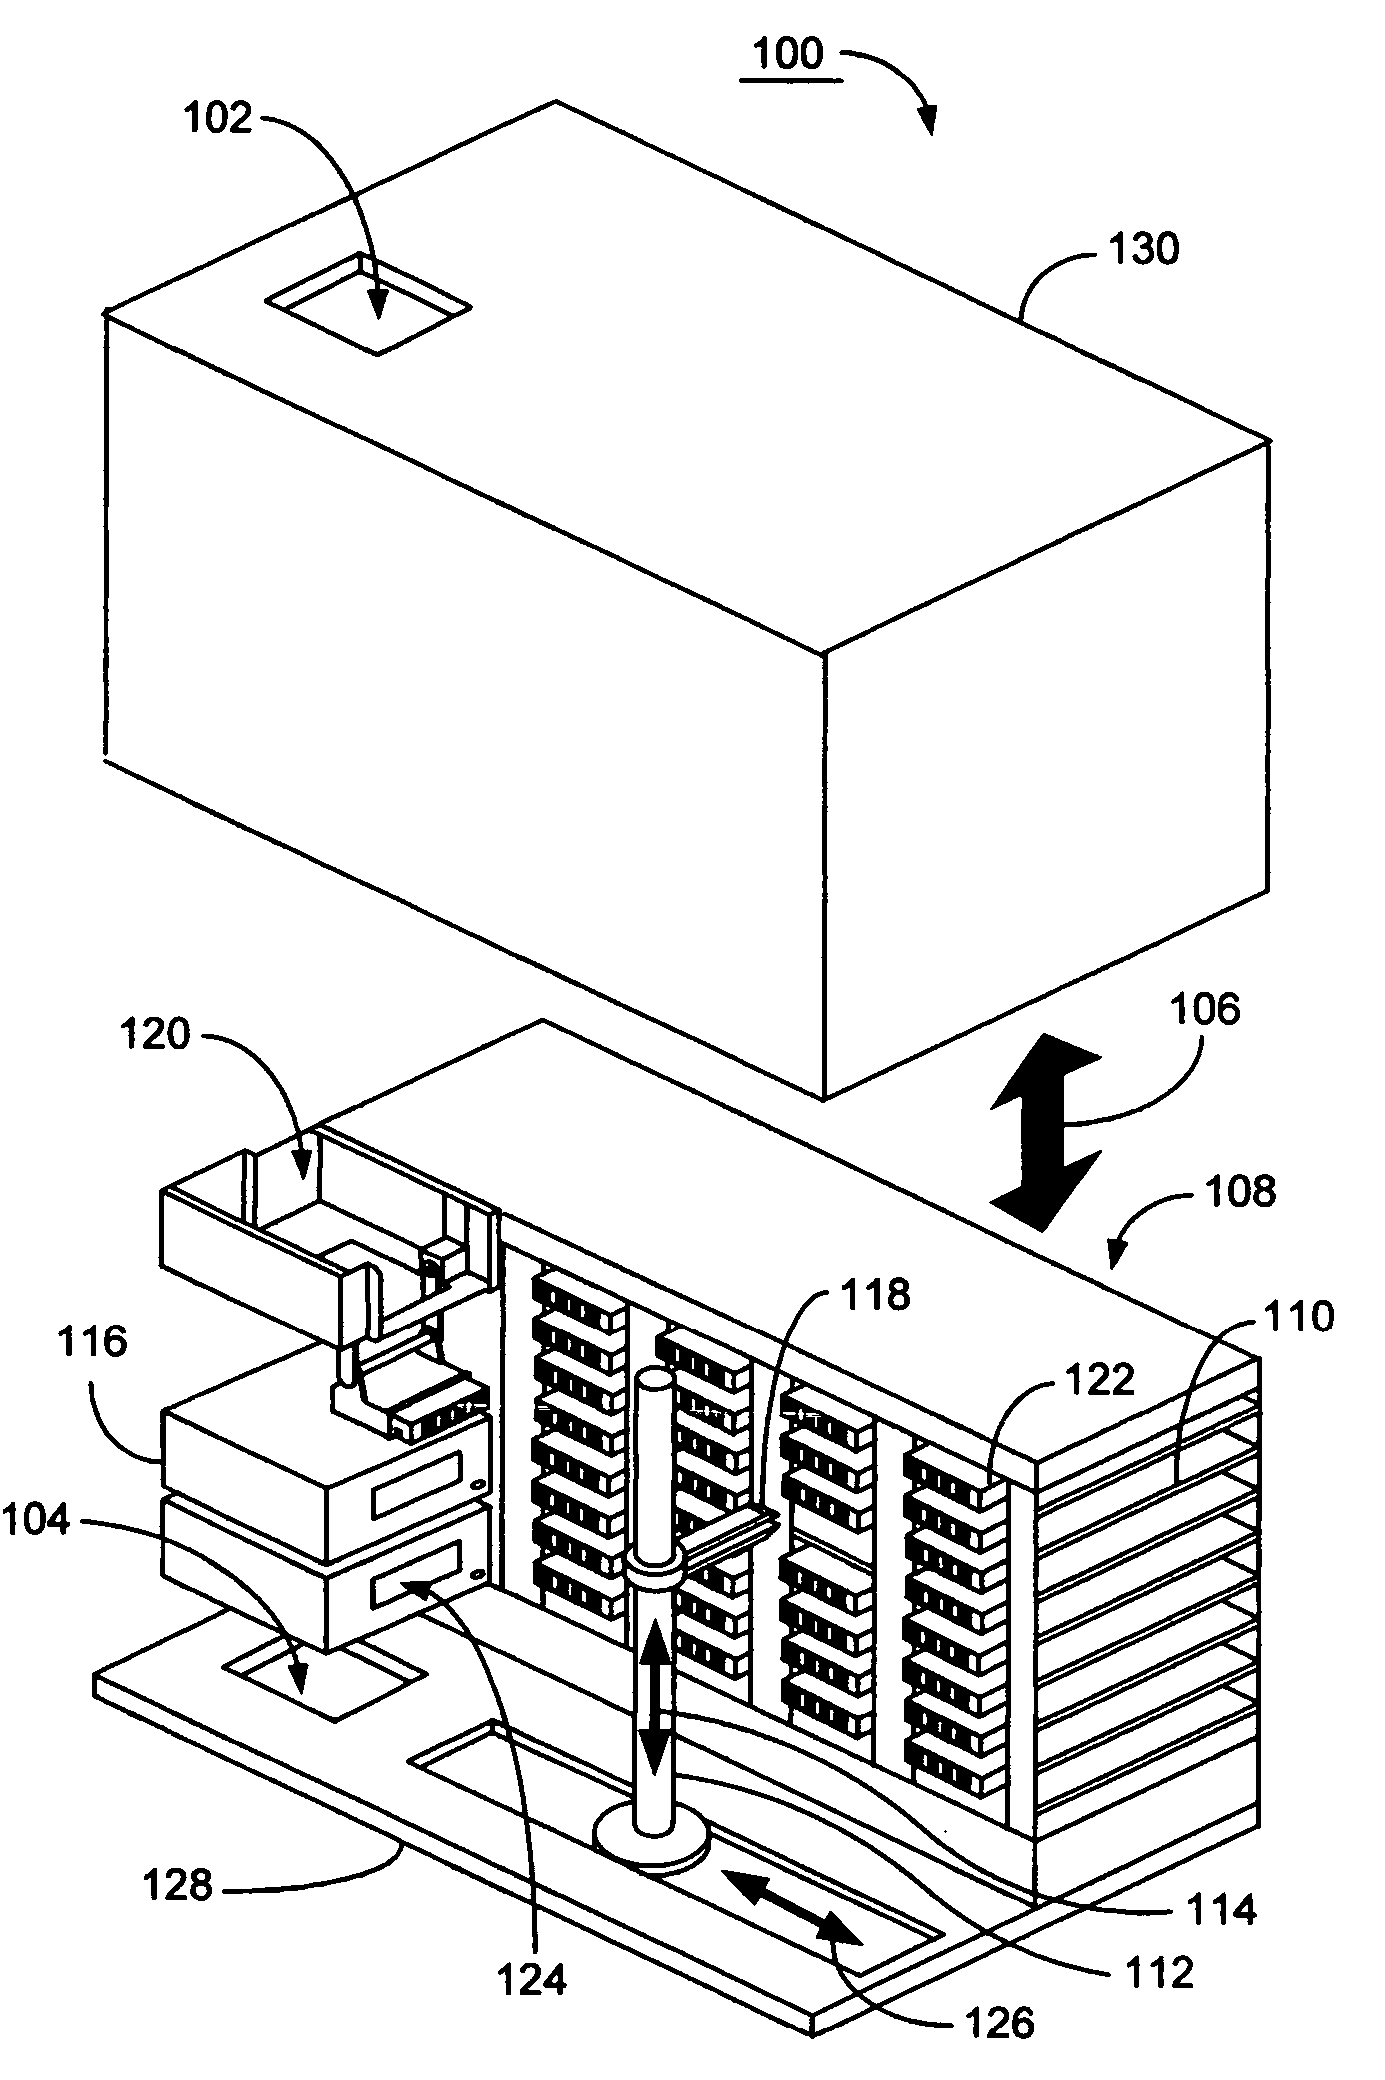 Storage media transferring method and apparatus within a multi-unit storage apparatus